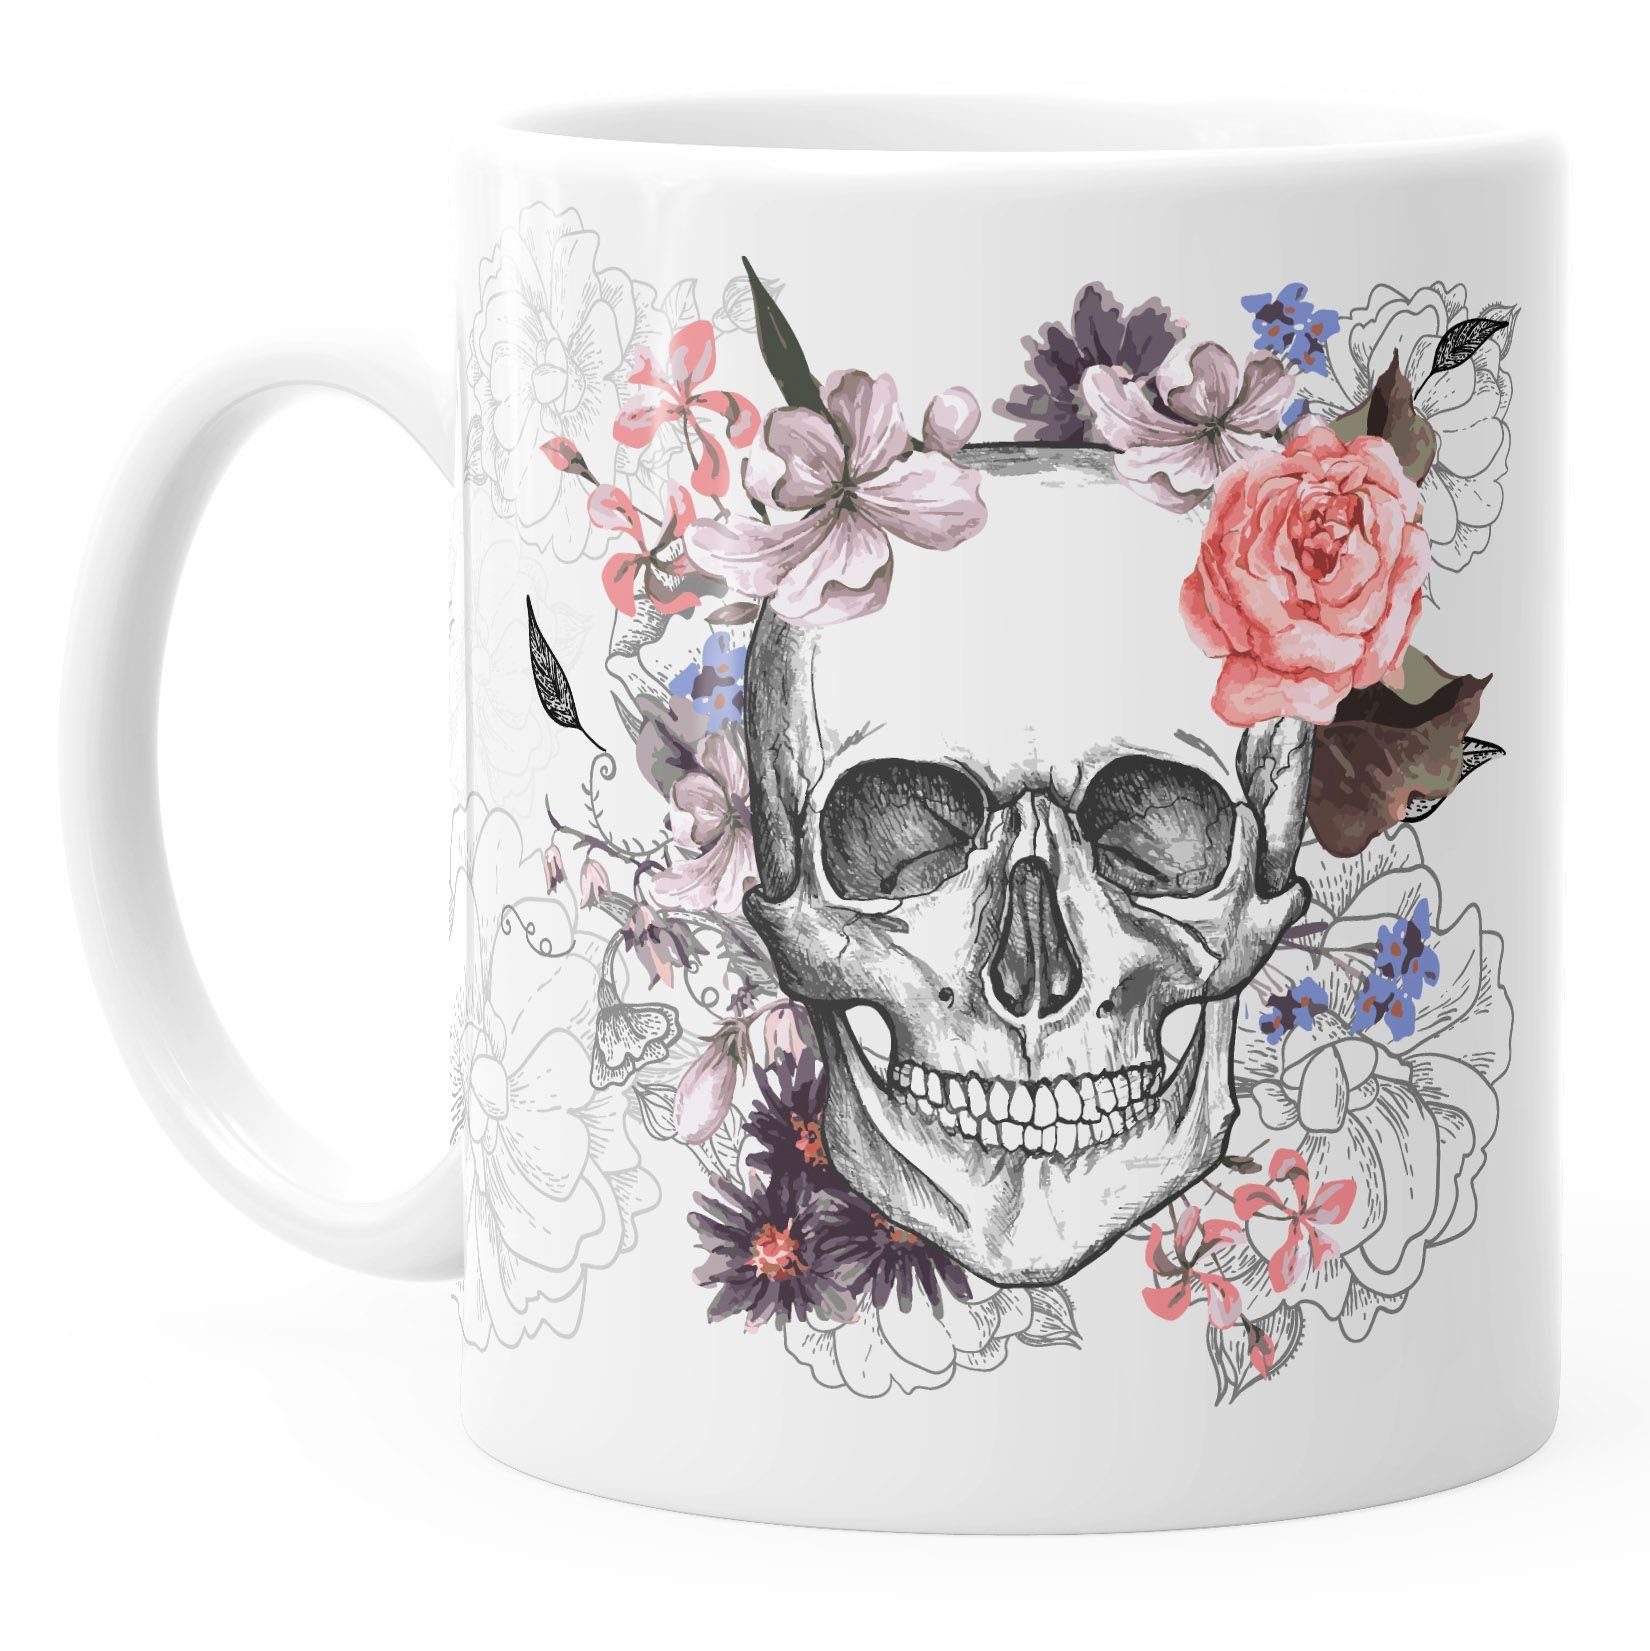 Totenkopf Autiga Boho Teetasse Keramik Kaffee-Tasse Keramiktasse Schädel Blumen mit Autiga®, Skull Tasse Aufdruck aus Flower Keramik,